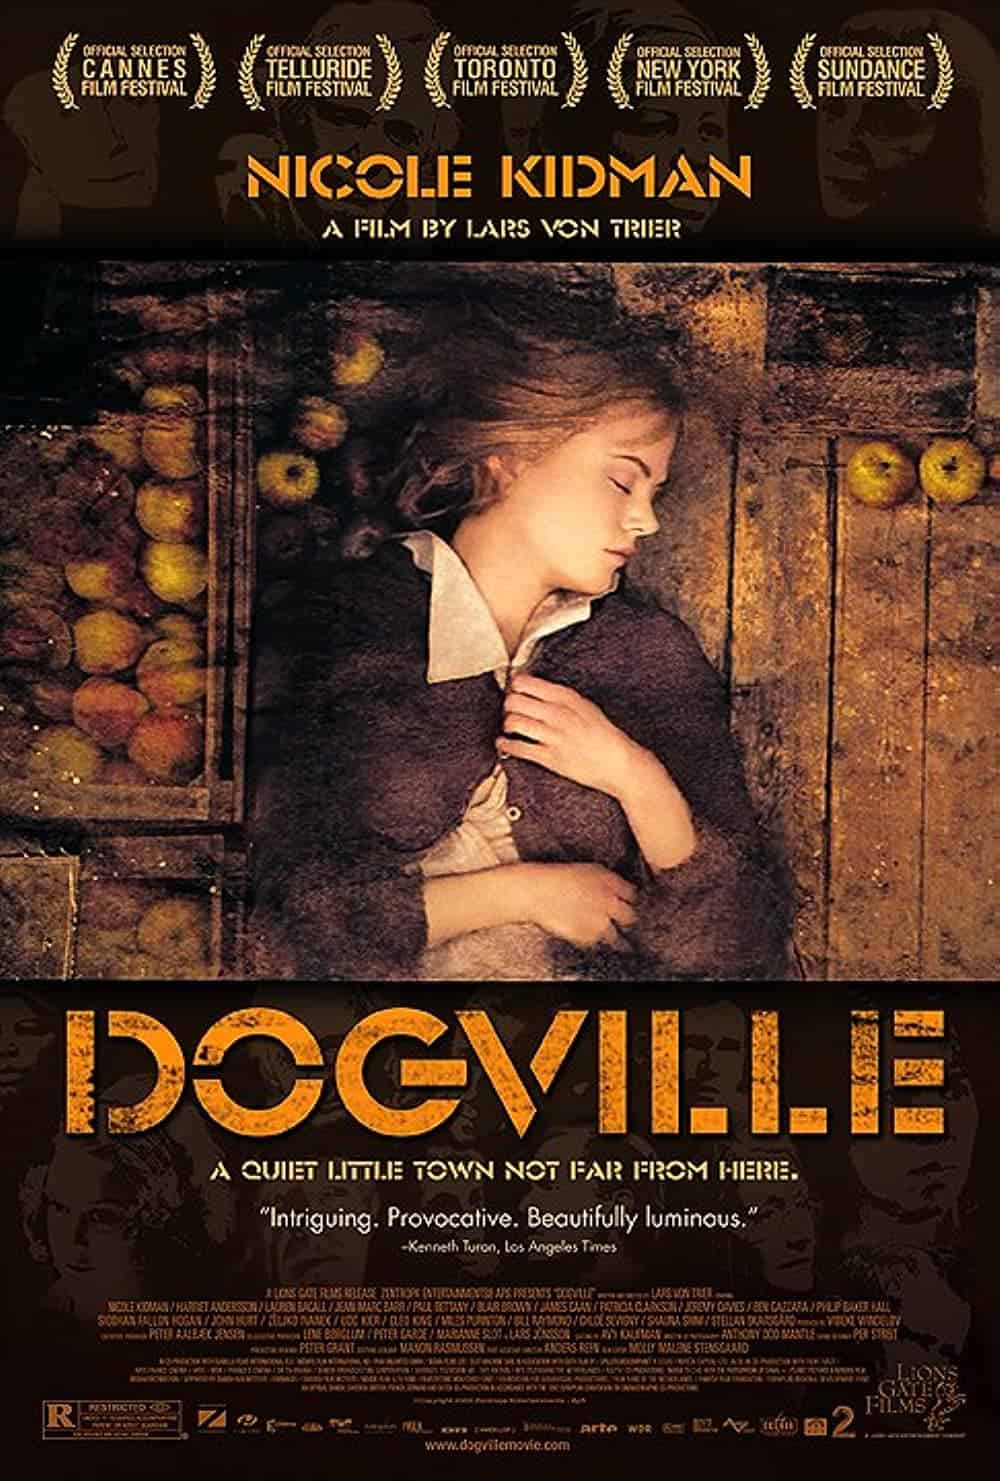 Dogville (2003) Best Nicole Kidman Movies (Ranked)